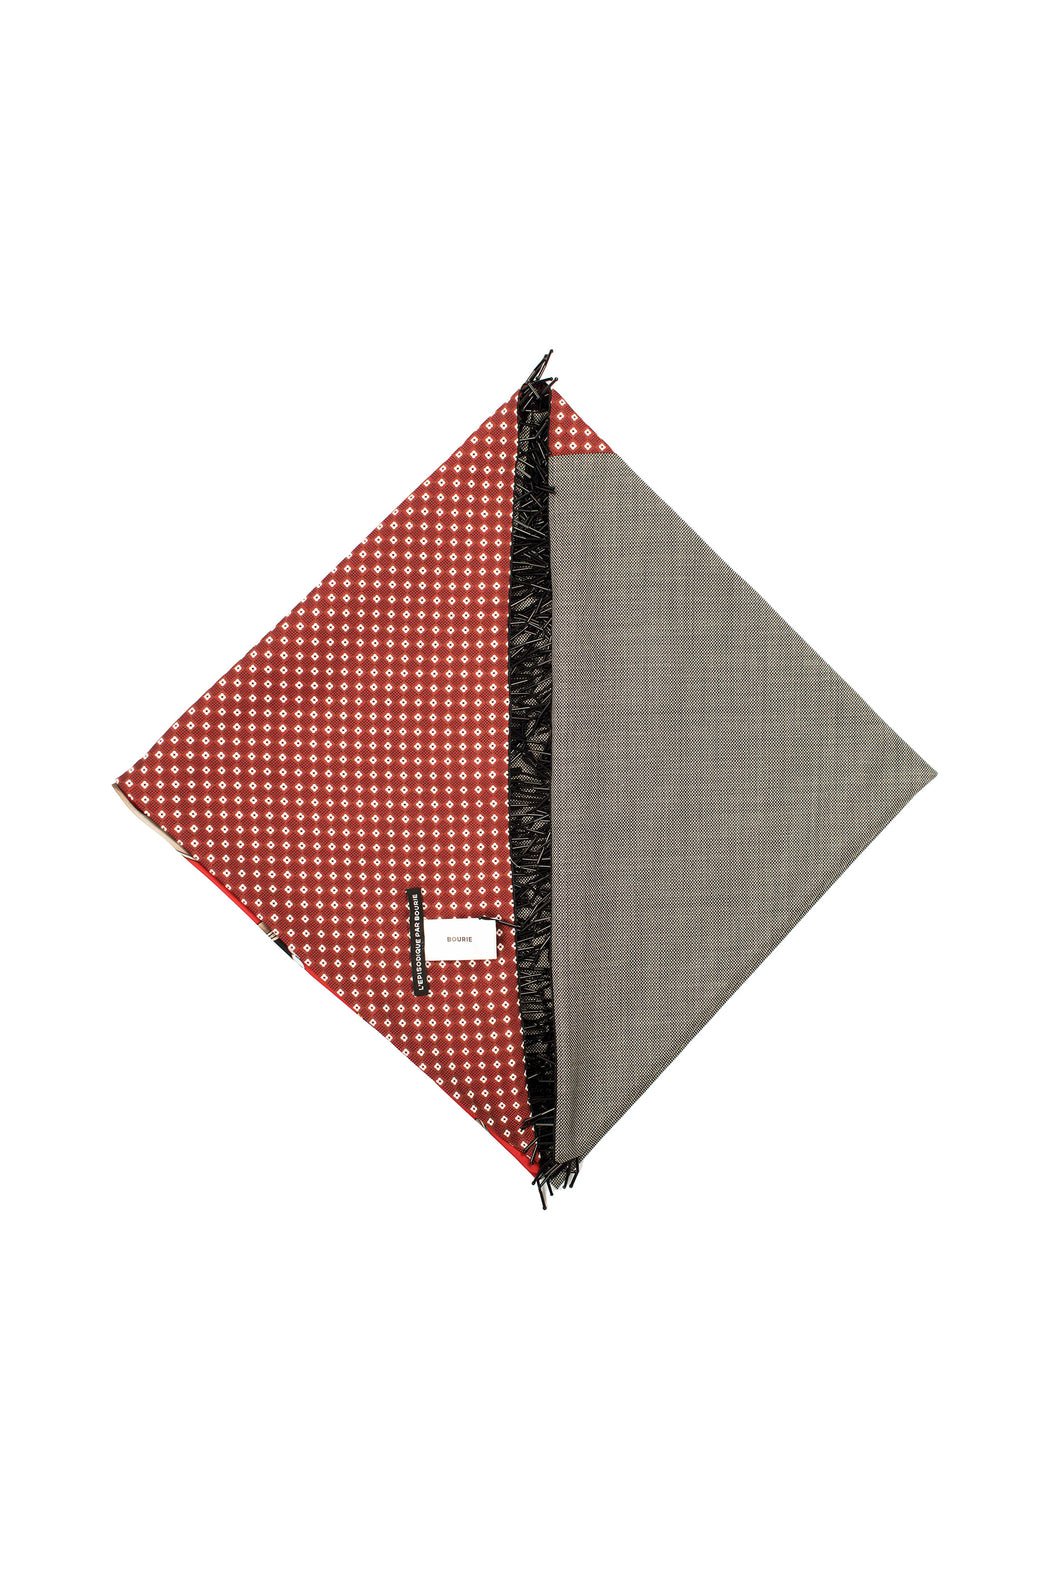 Patchwork Triangle Tassle Scarf - Red/Grey